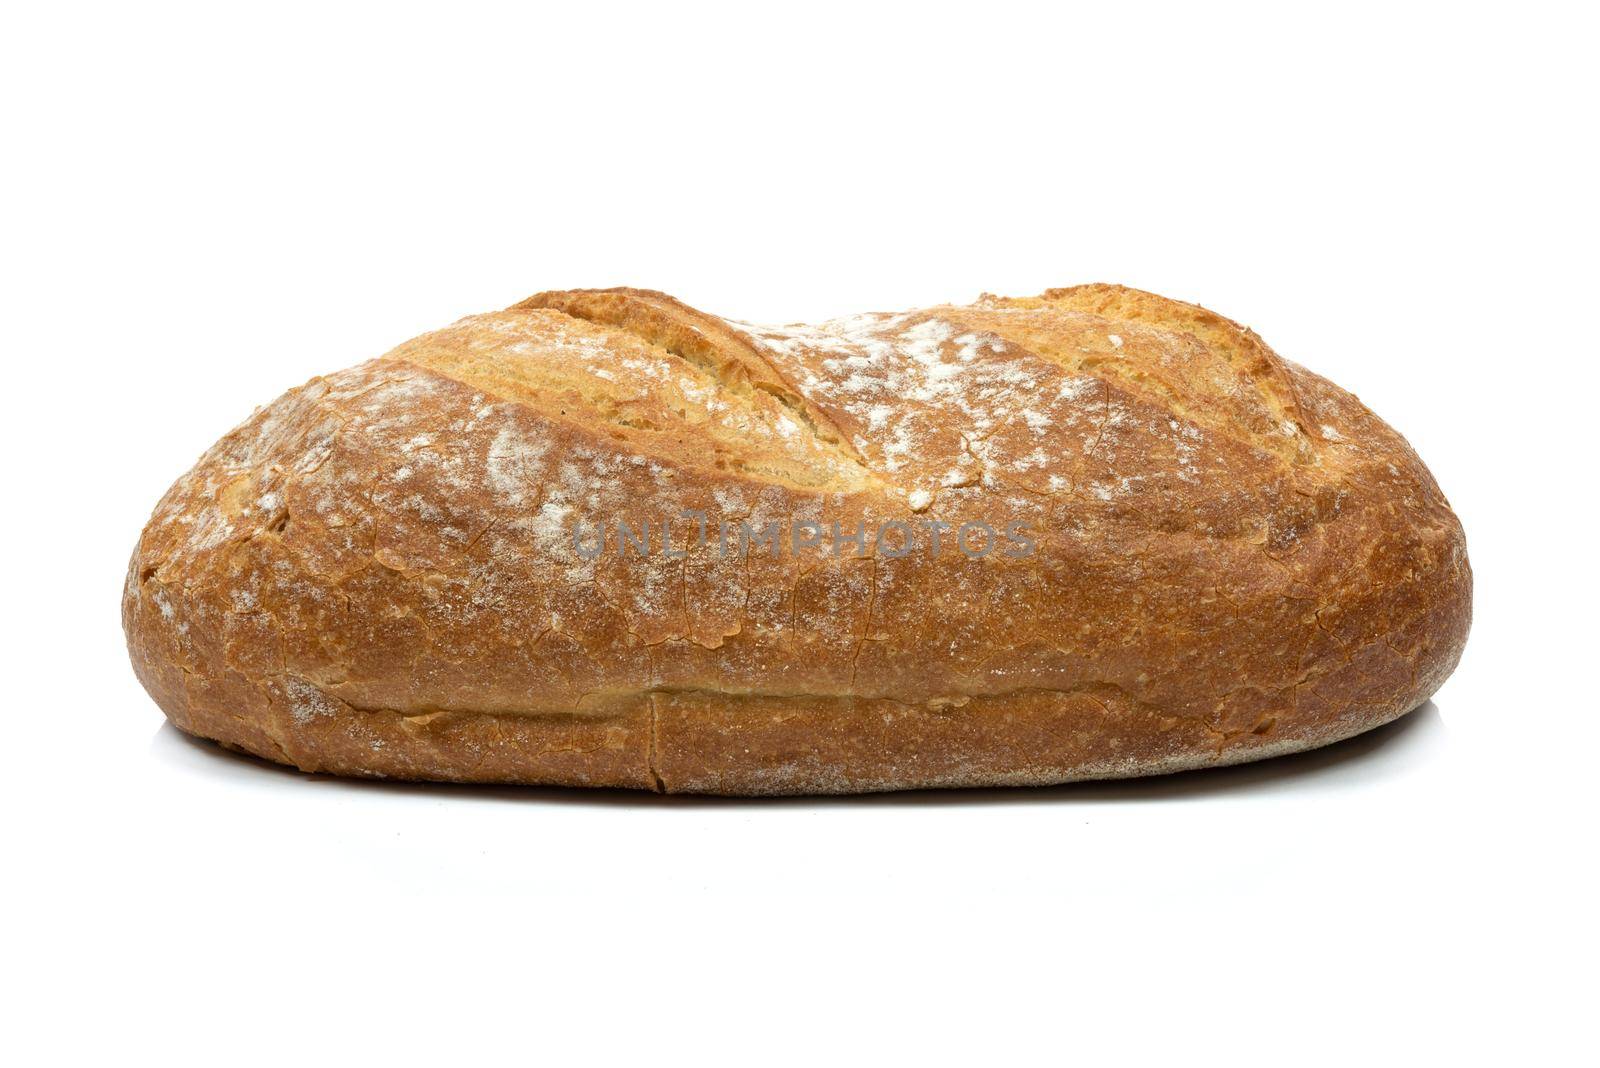 Big loaf of bread by wdnet_studio